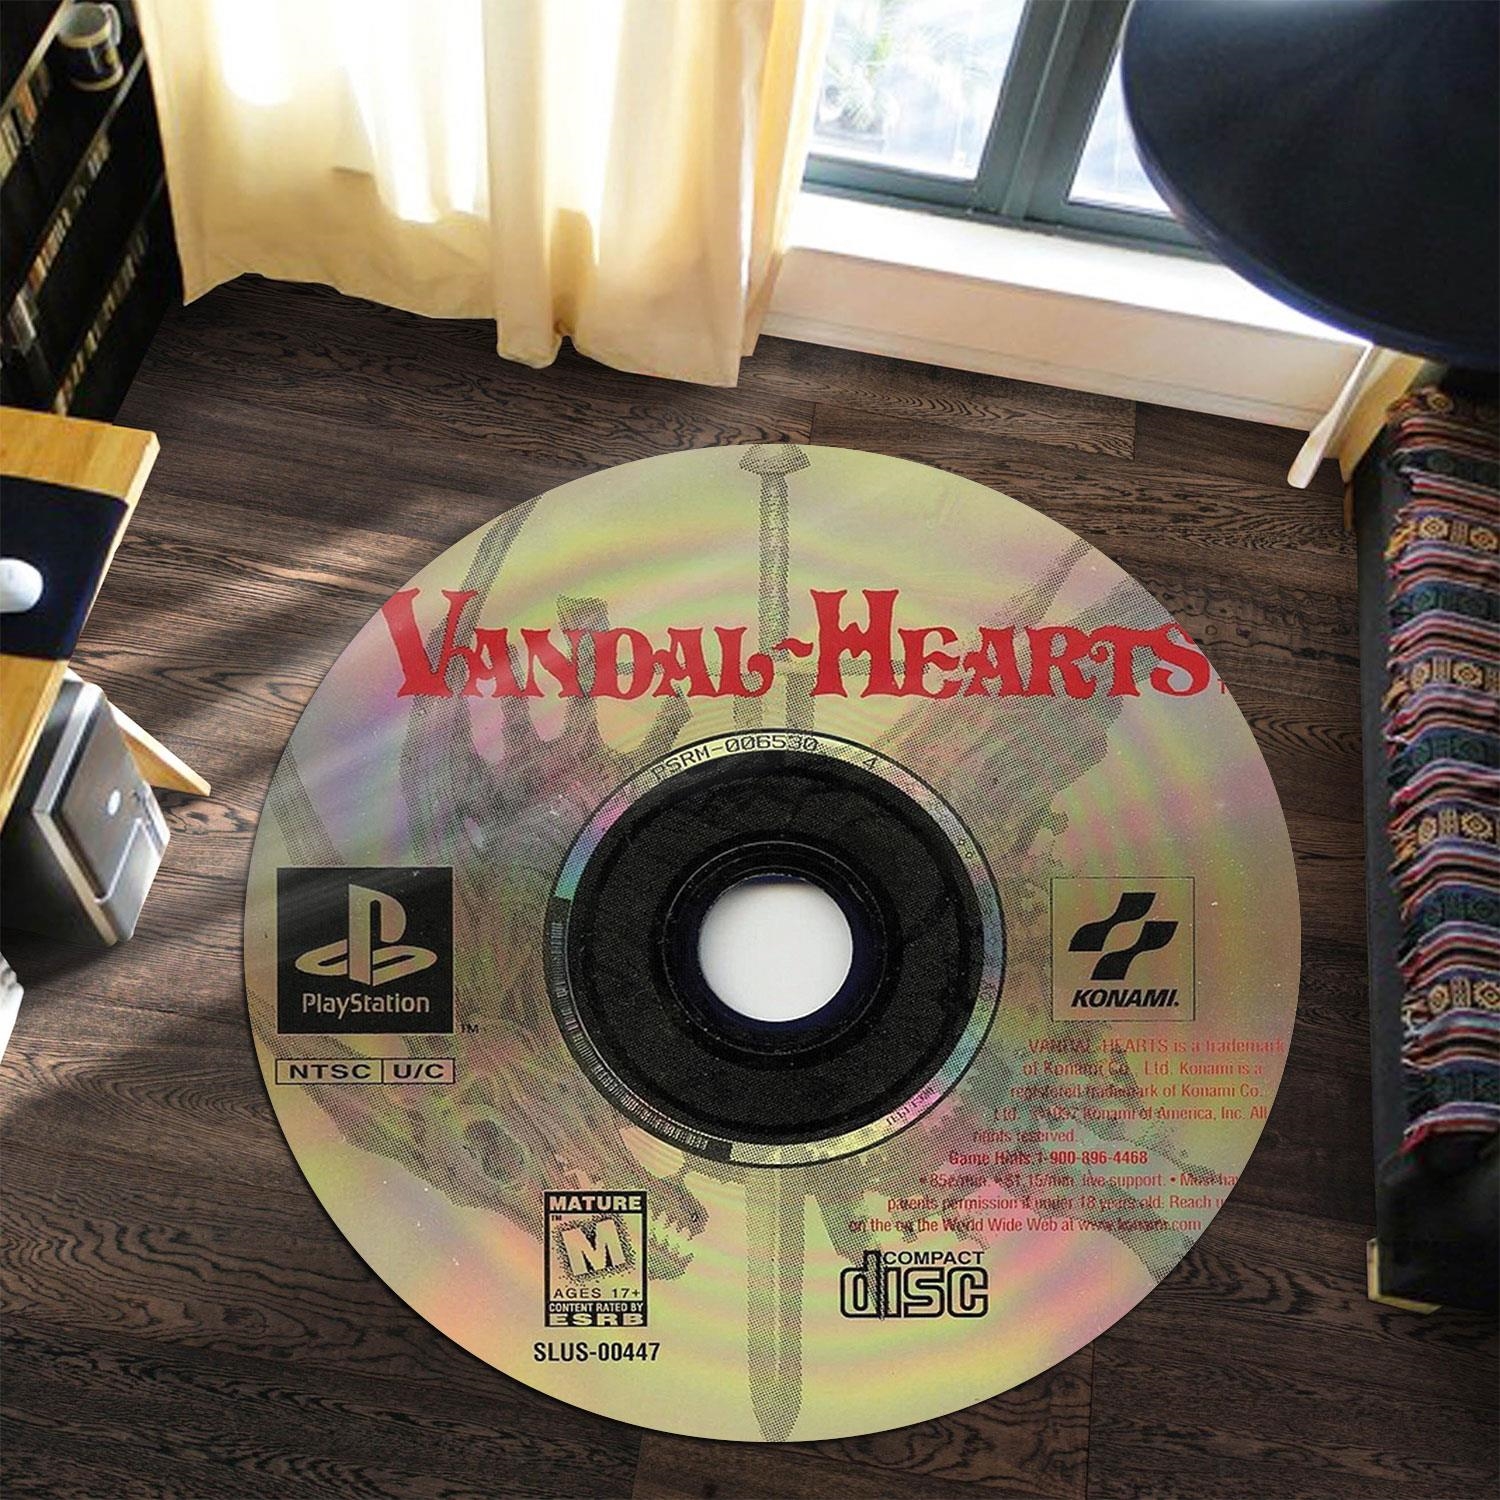 Vandal Hearts Playstation Disc Round Rug Carpet